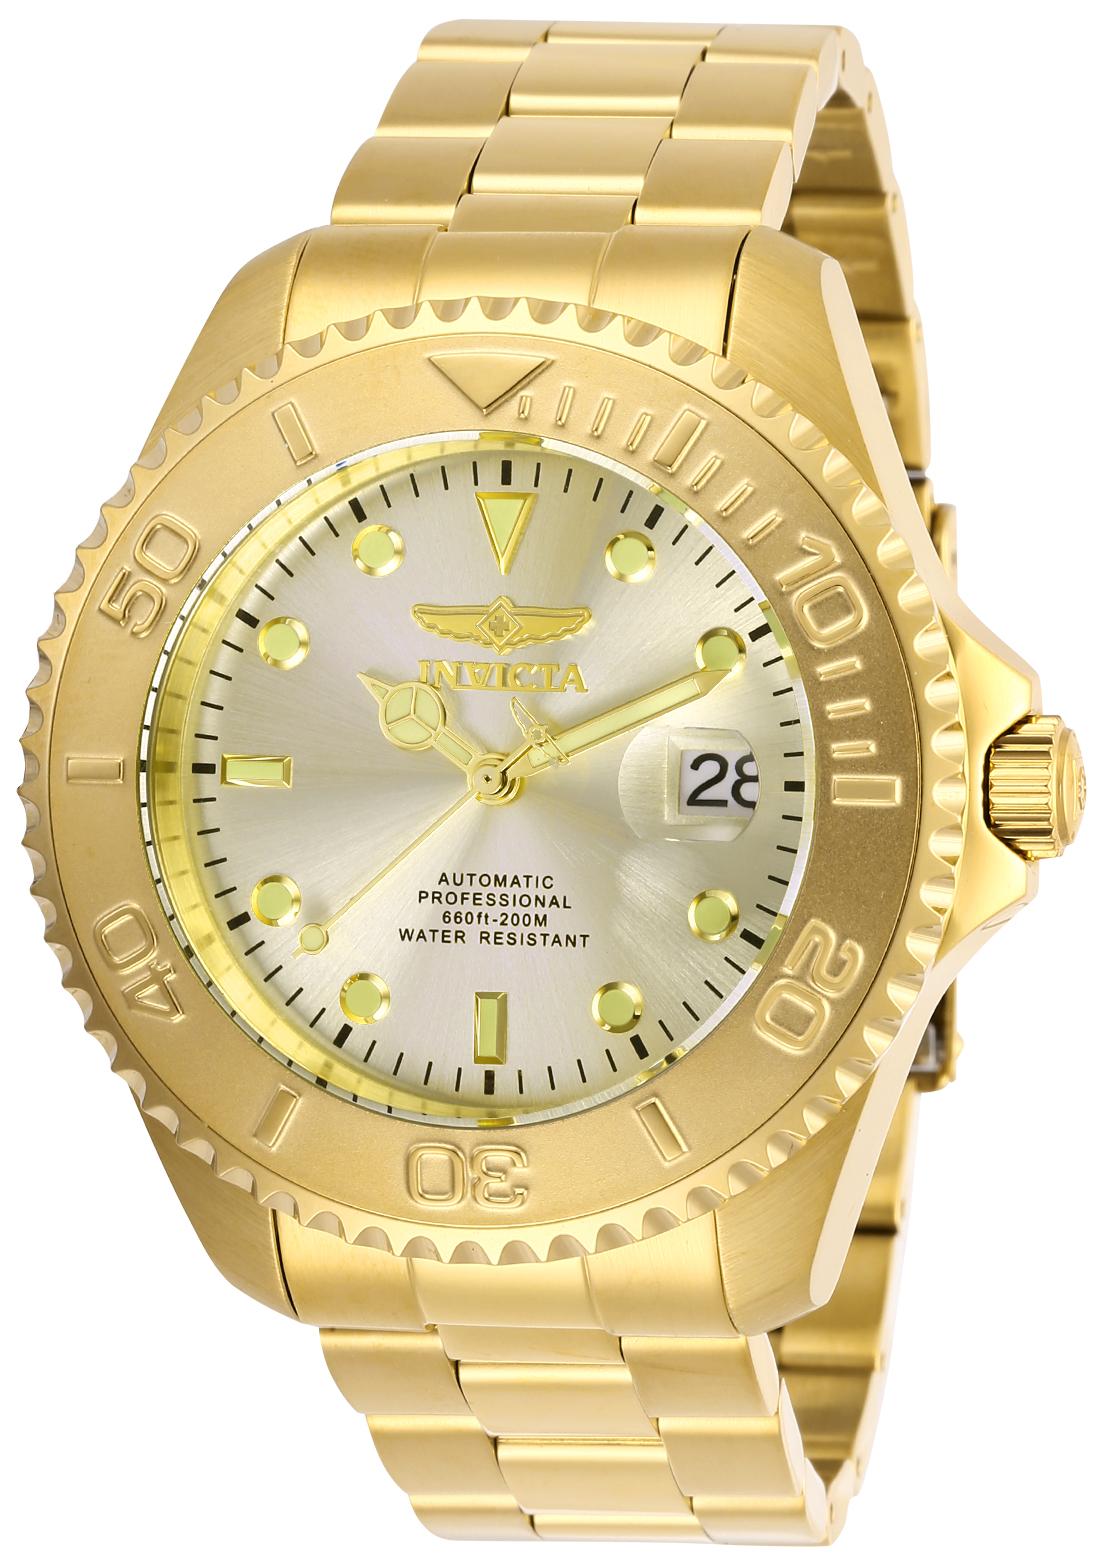 Invicta Pro Diver Automatic Men's Watch - 47mm, Gold (28950)